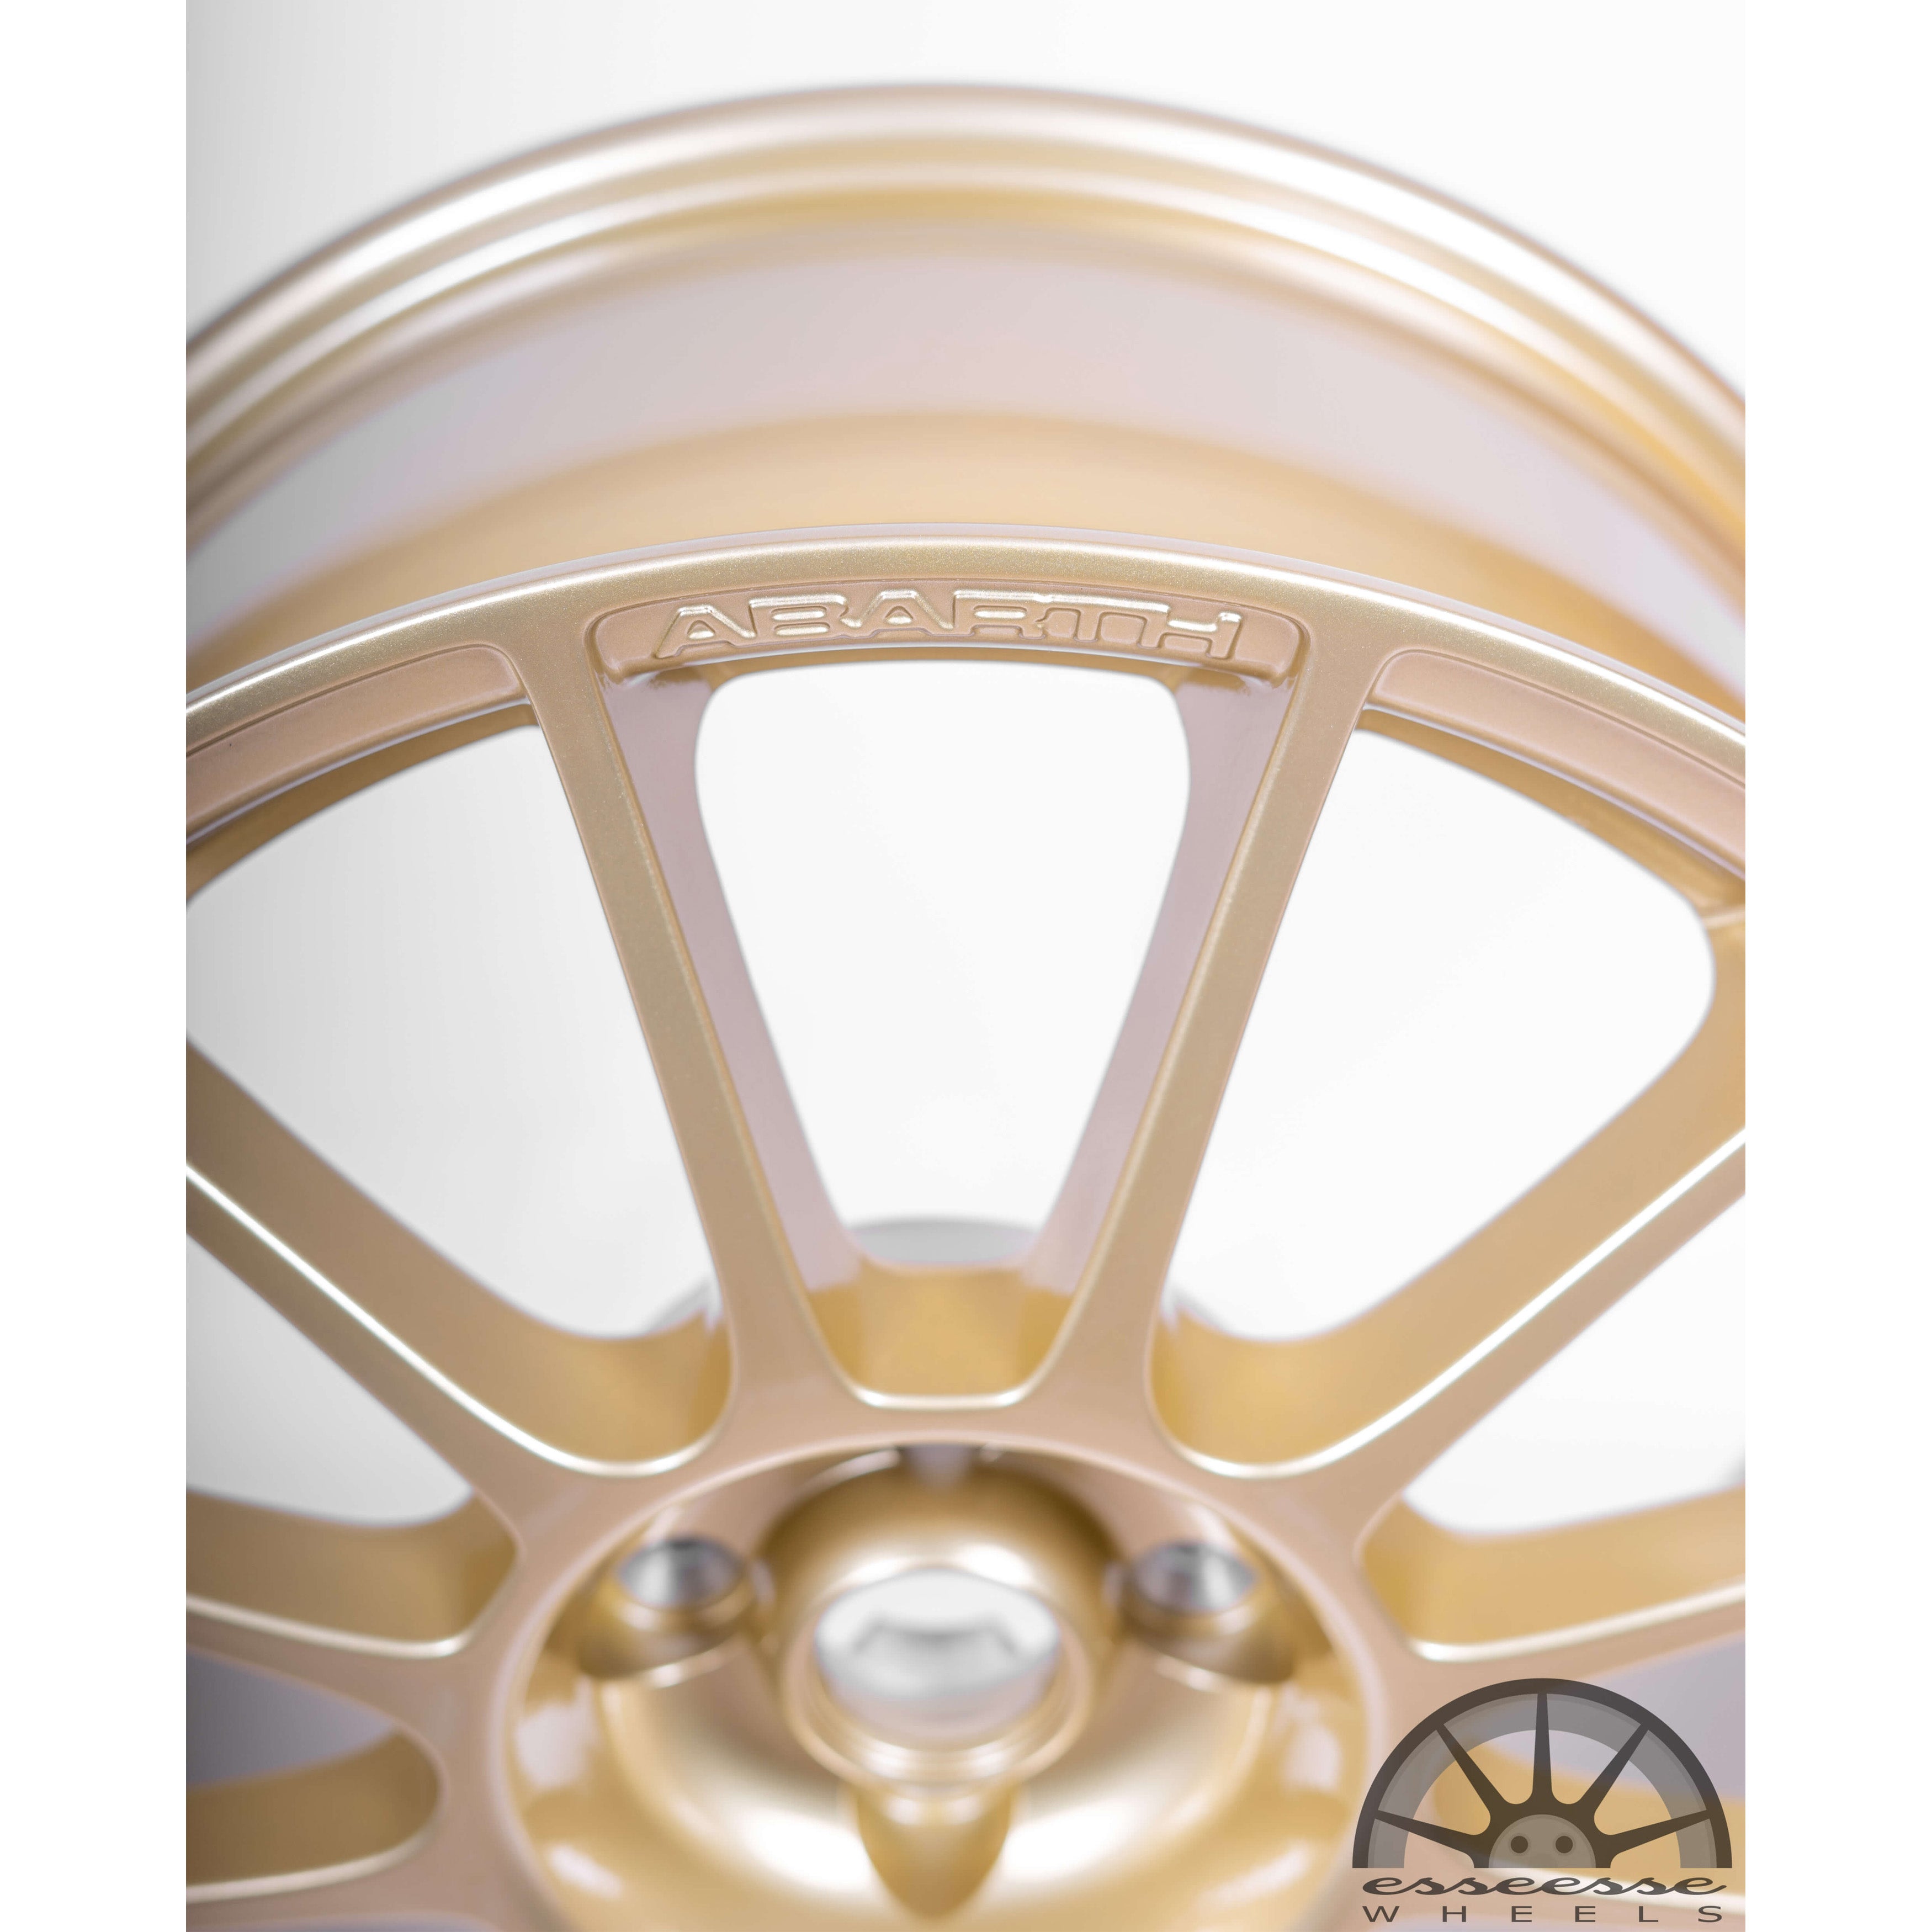 Original Abarth Esseesse Gold wheels